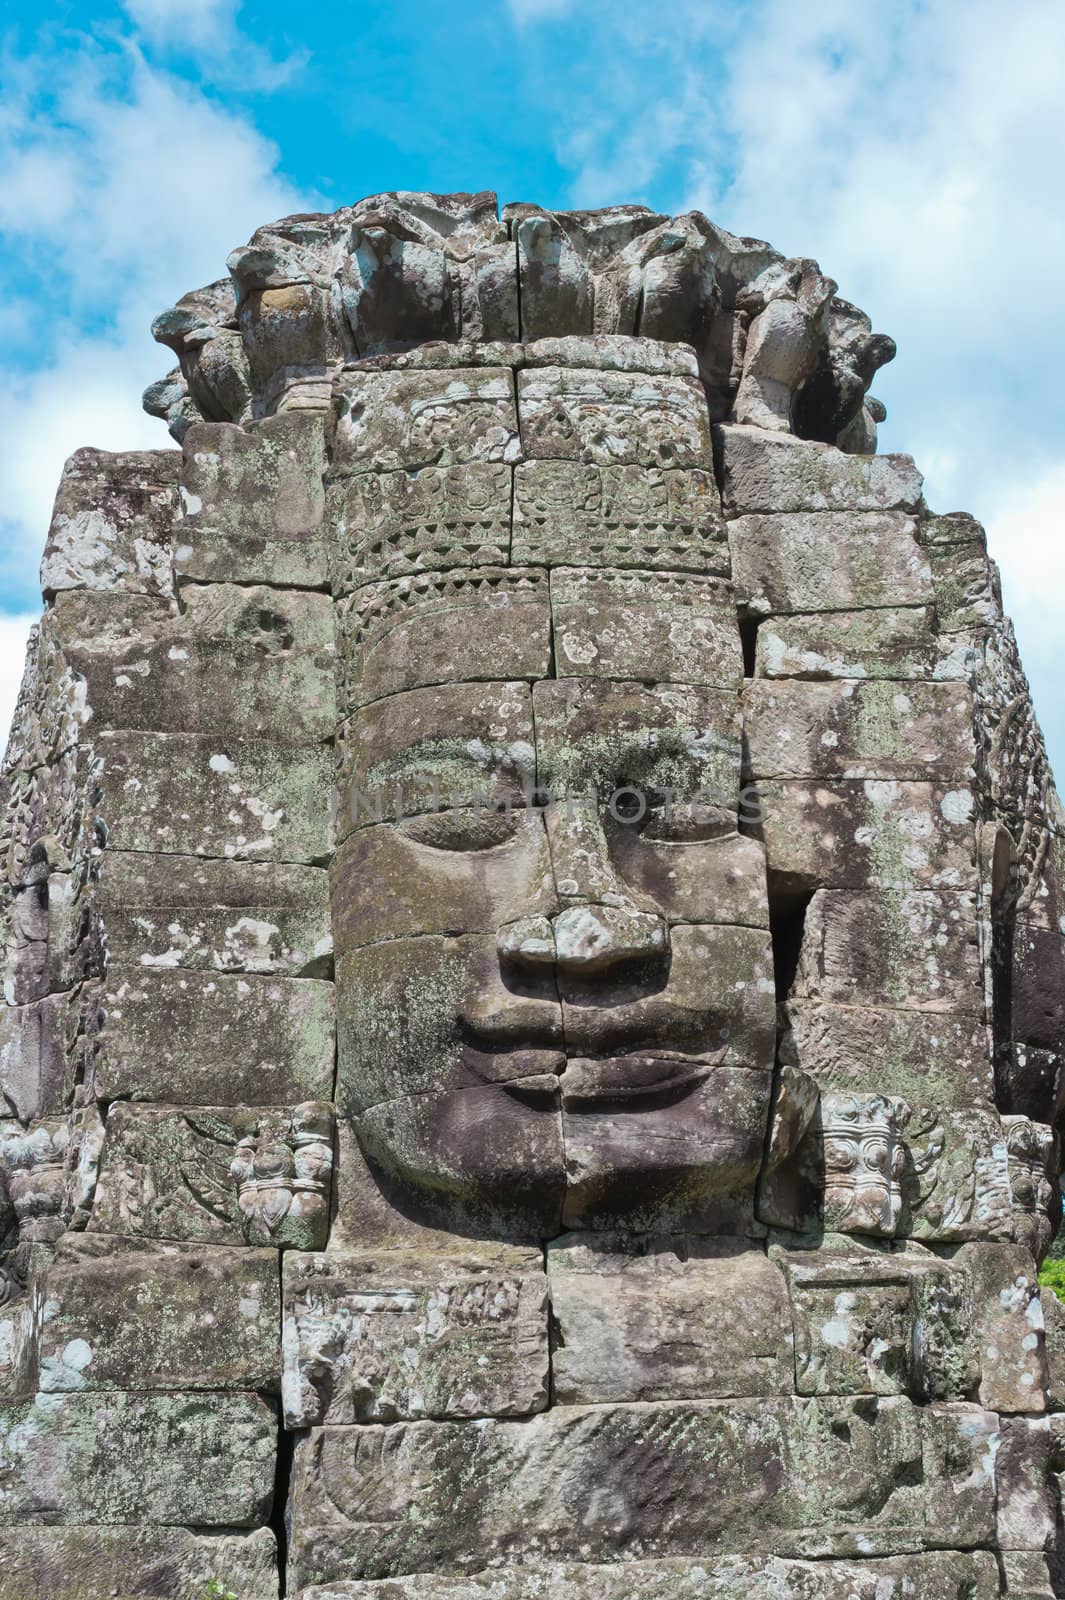 Stone face of Bodhisattva Lokesvara, Bayon Temple - Angkor Area, near Siem Reap, Cambodia, Southeast Asia